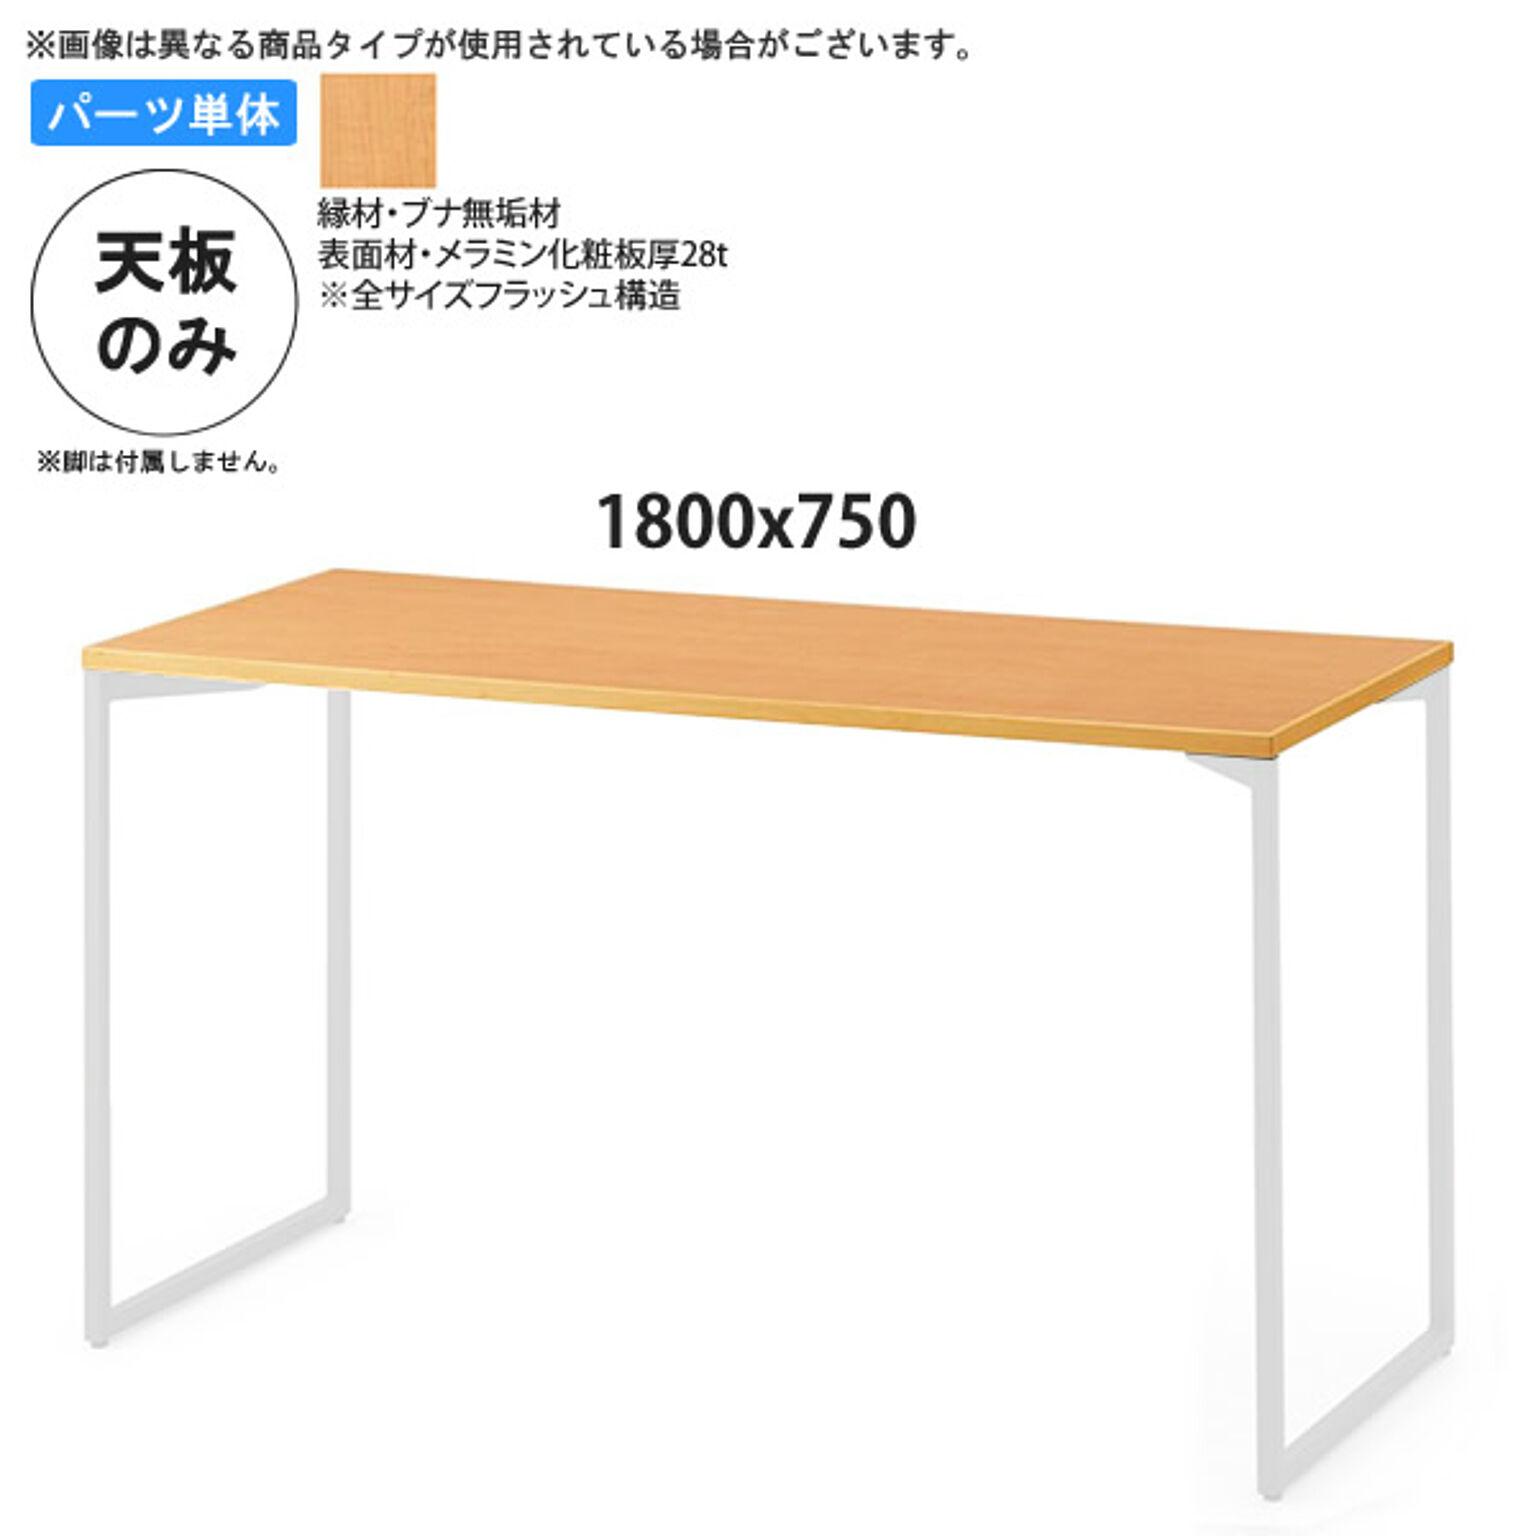 1800x750 テーブル天板のみ 業務用家具：table topシリーズ★ ブナ木縁メラミン天板 天厚28 日本製 受注生産